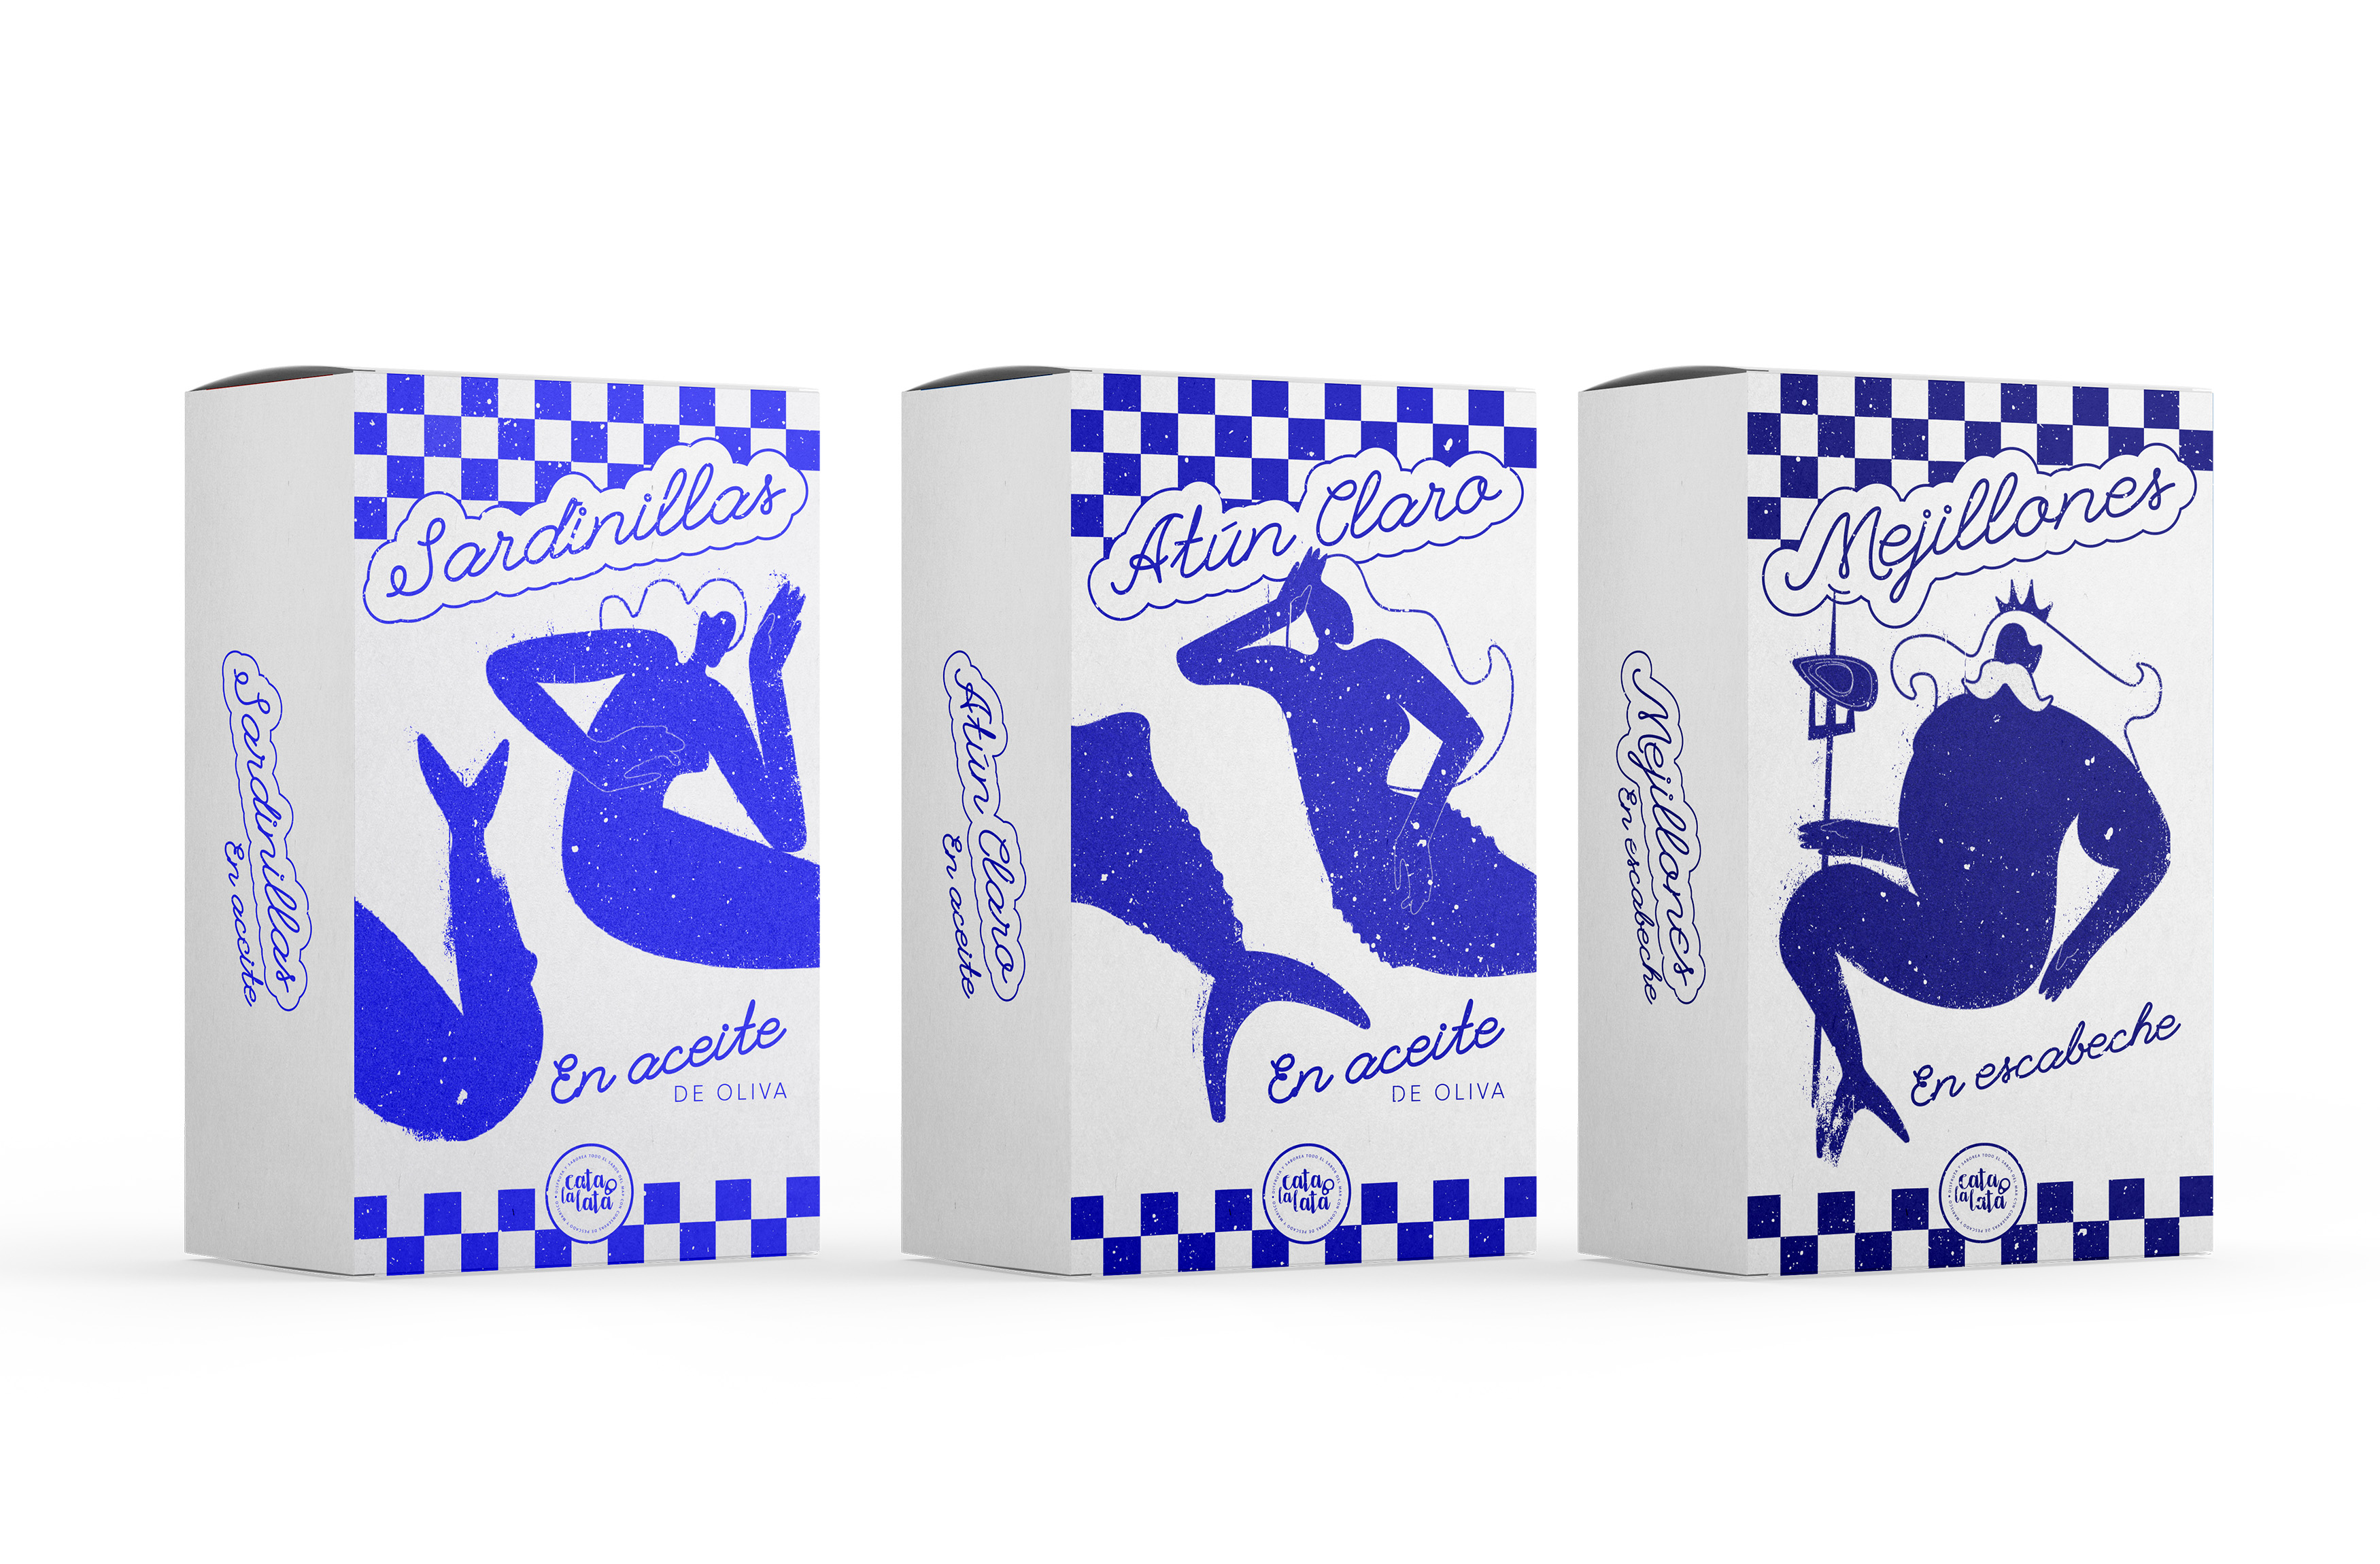 'Disfruta tu turno' packaging para Cata la Lata by Jimena - Creative Work